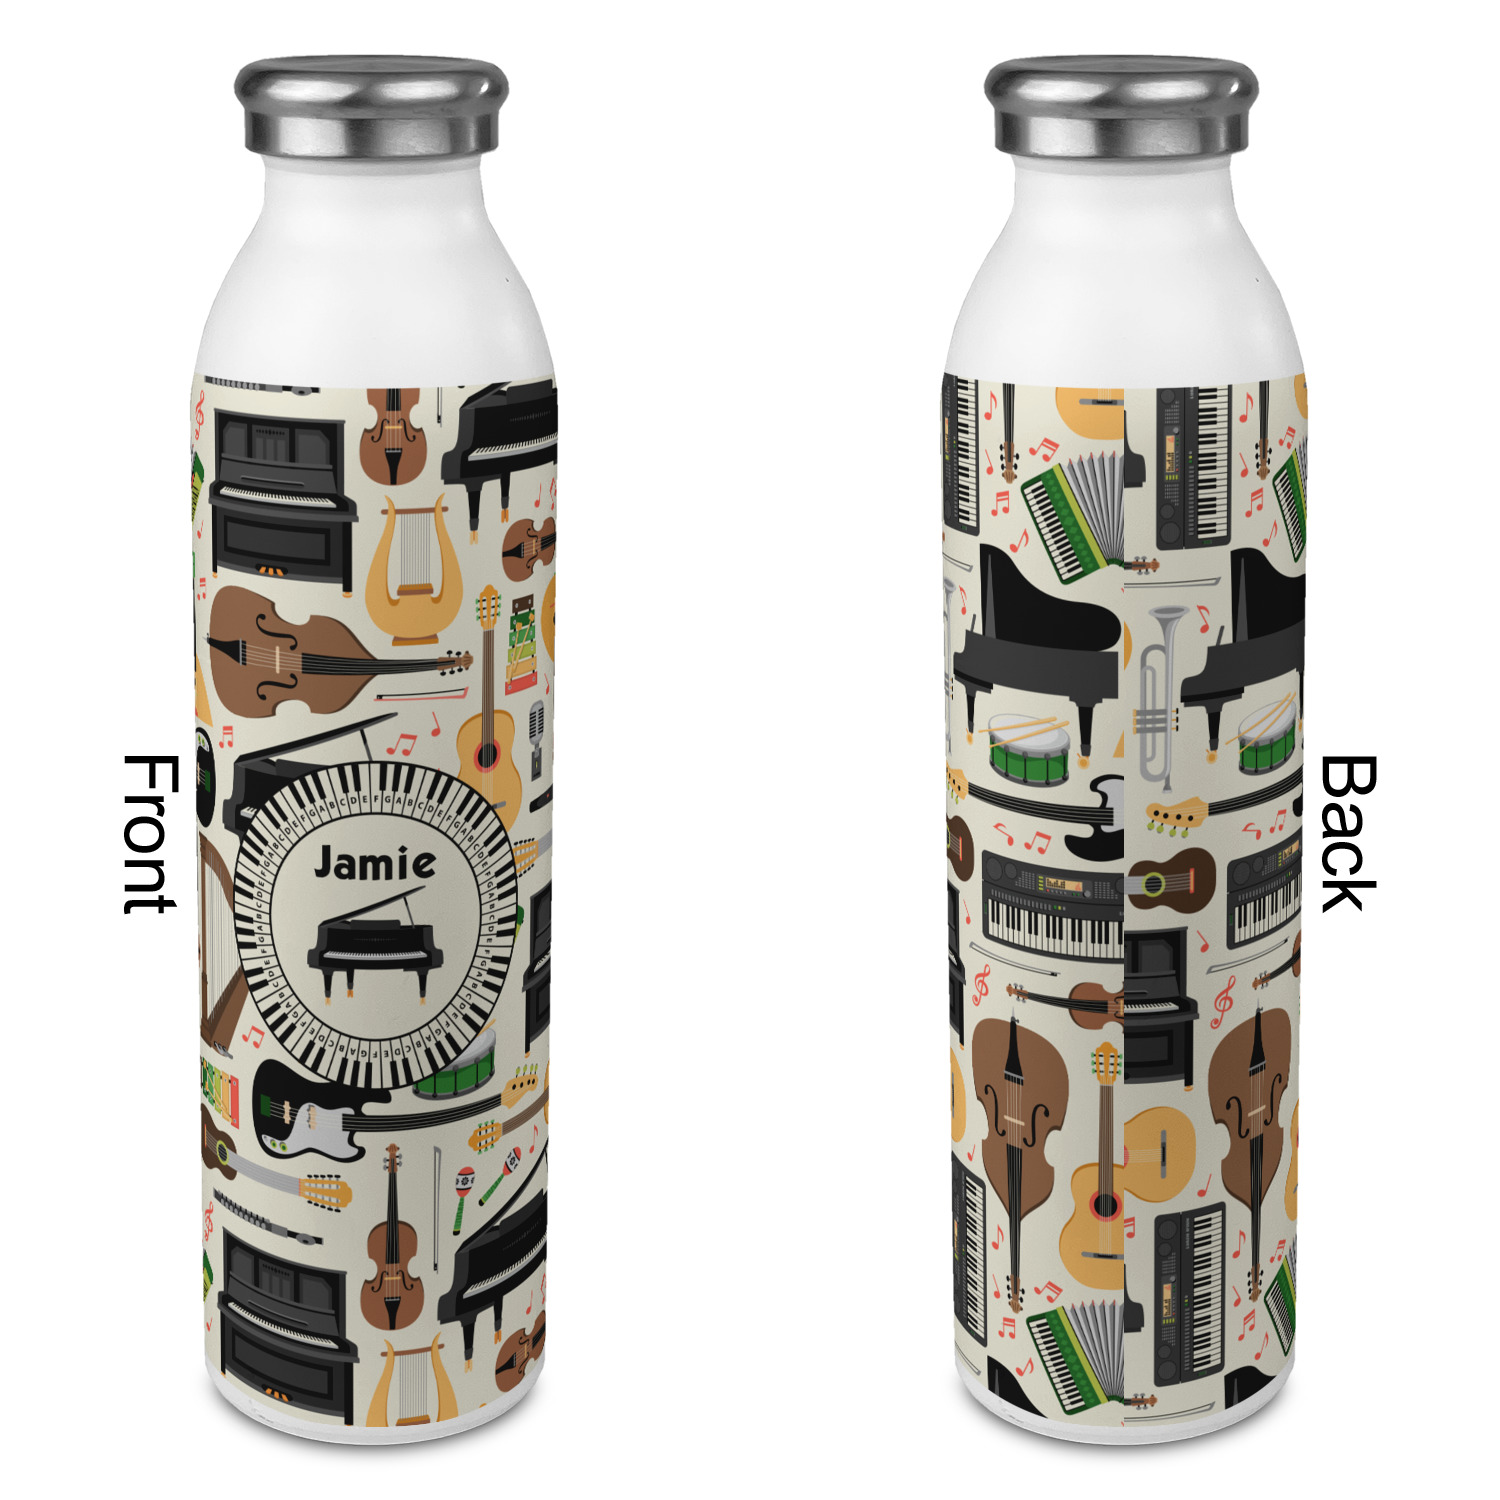 Design Your Own 20oz Stainless Steel Water Bottle - Full Print